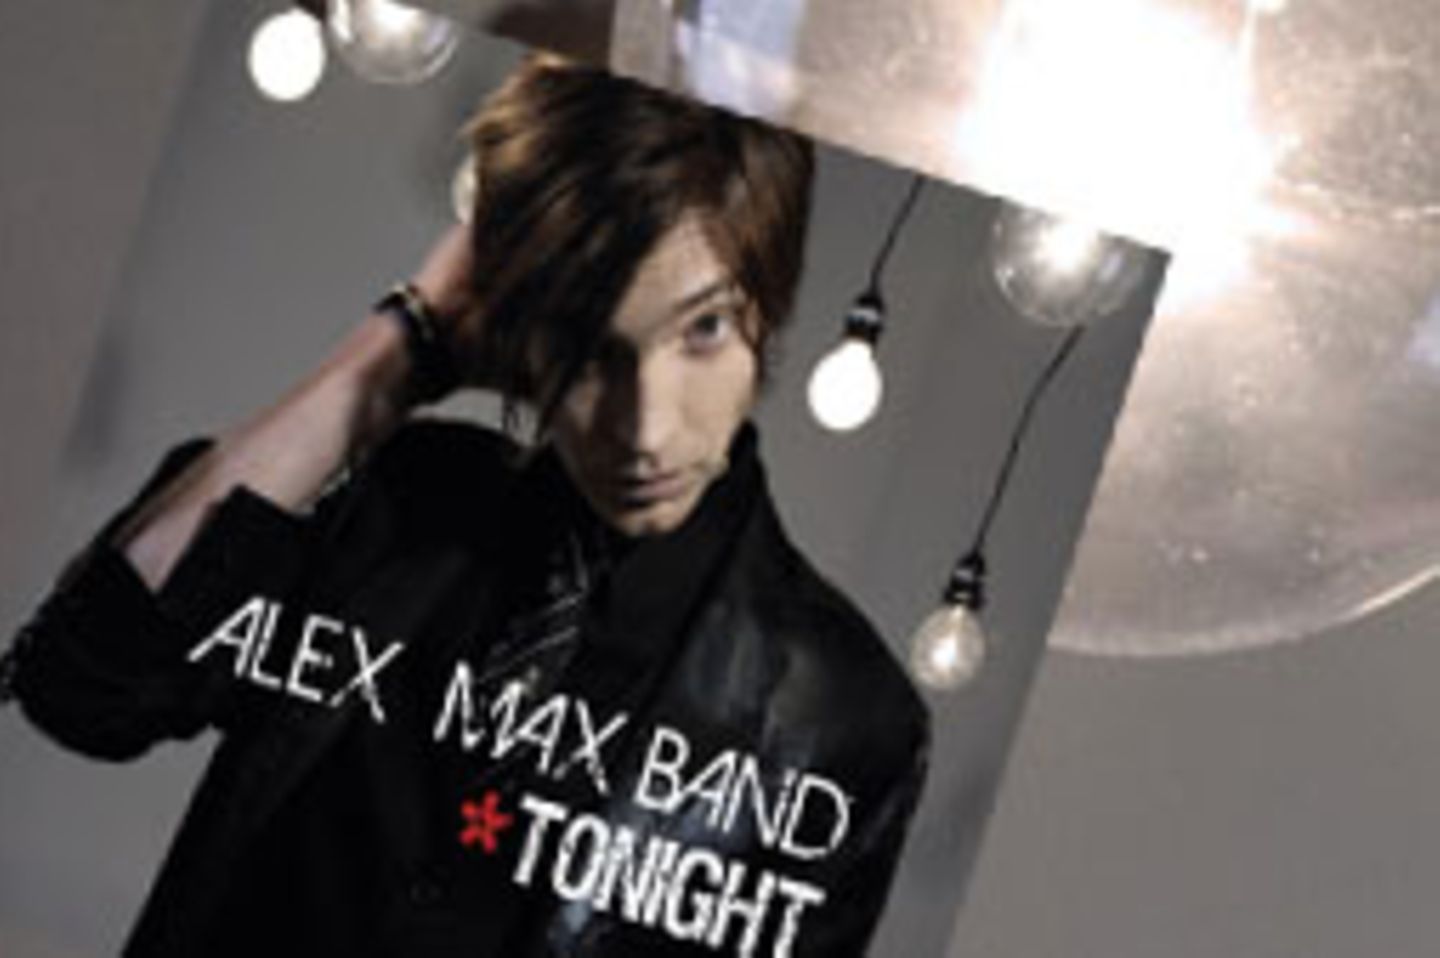 RTL-Single-Tipp: Alex Max Band "Tonight"